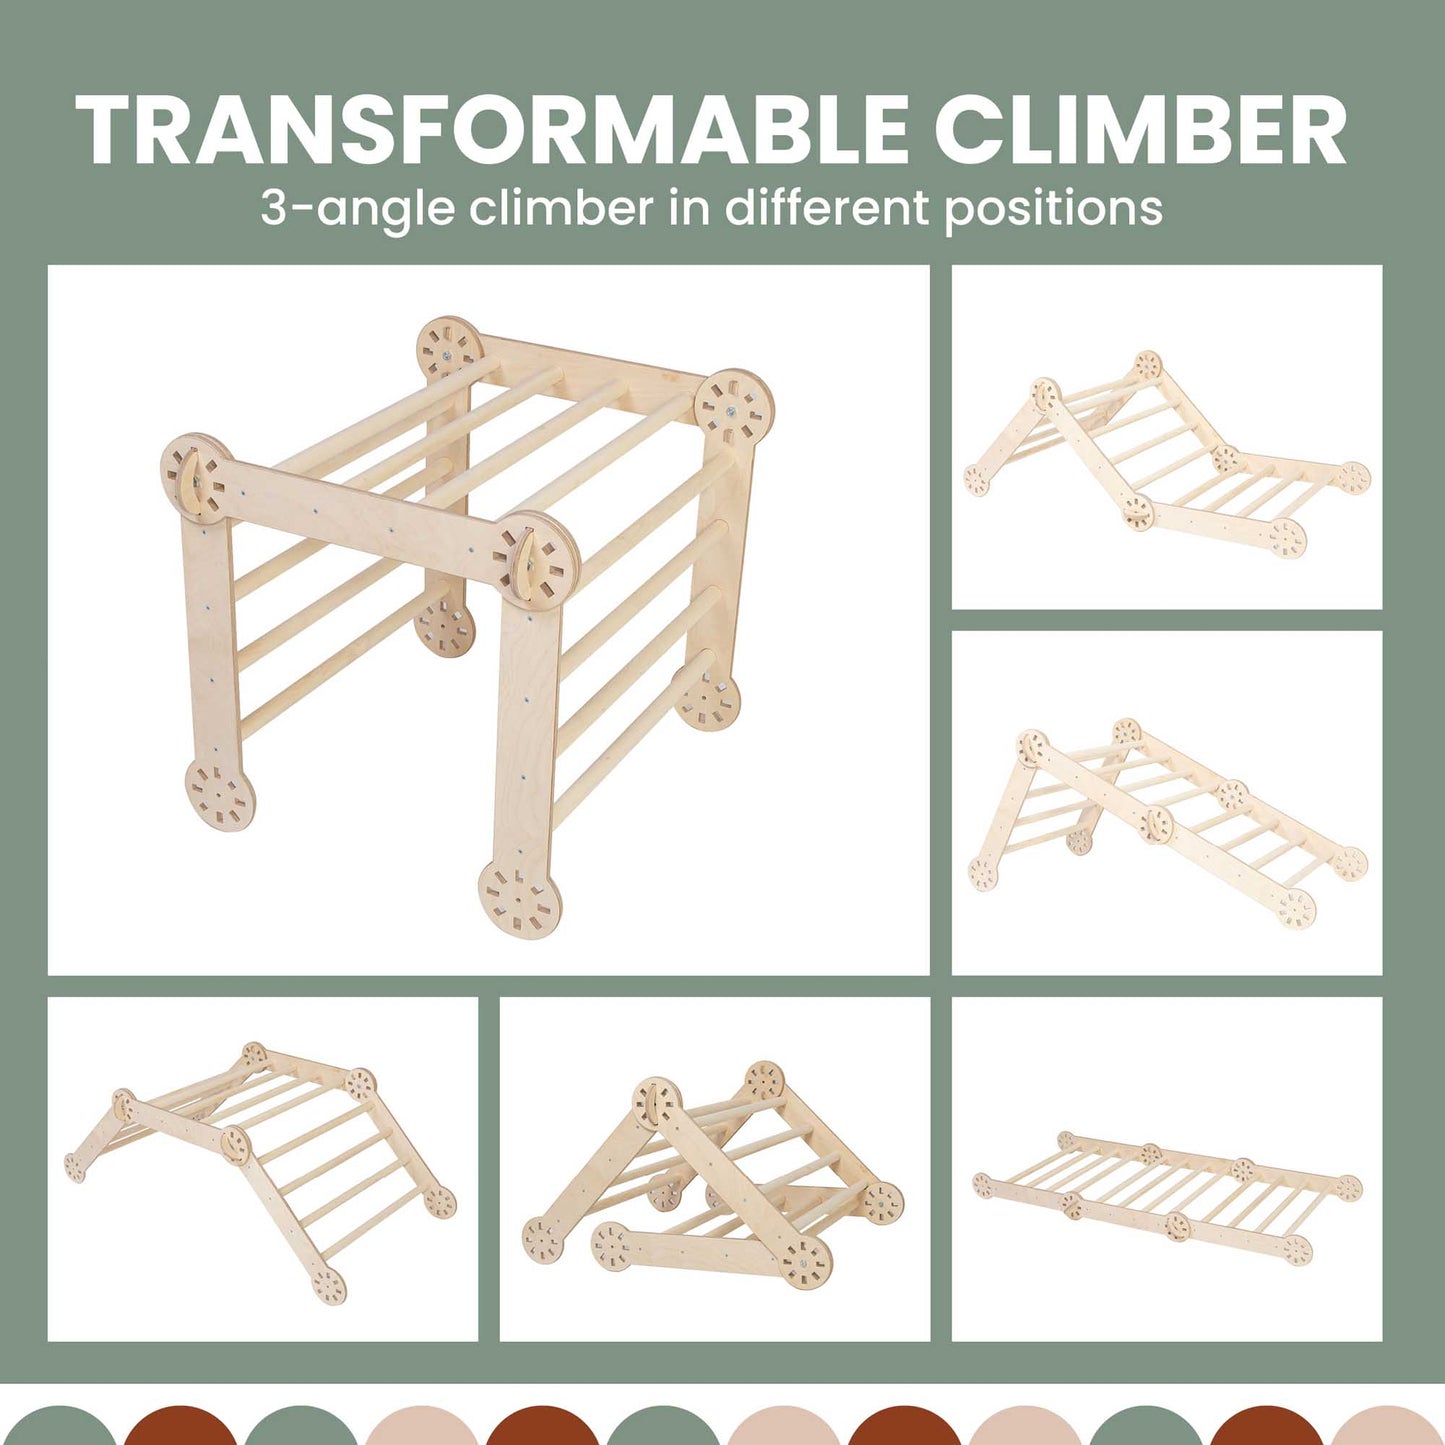 Climbing arch + Transformable climbing gym + a ramp